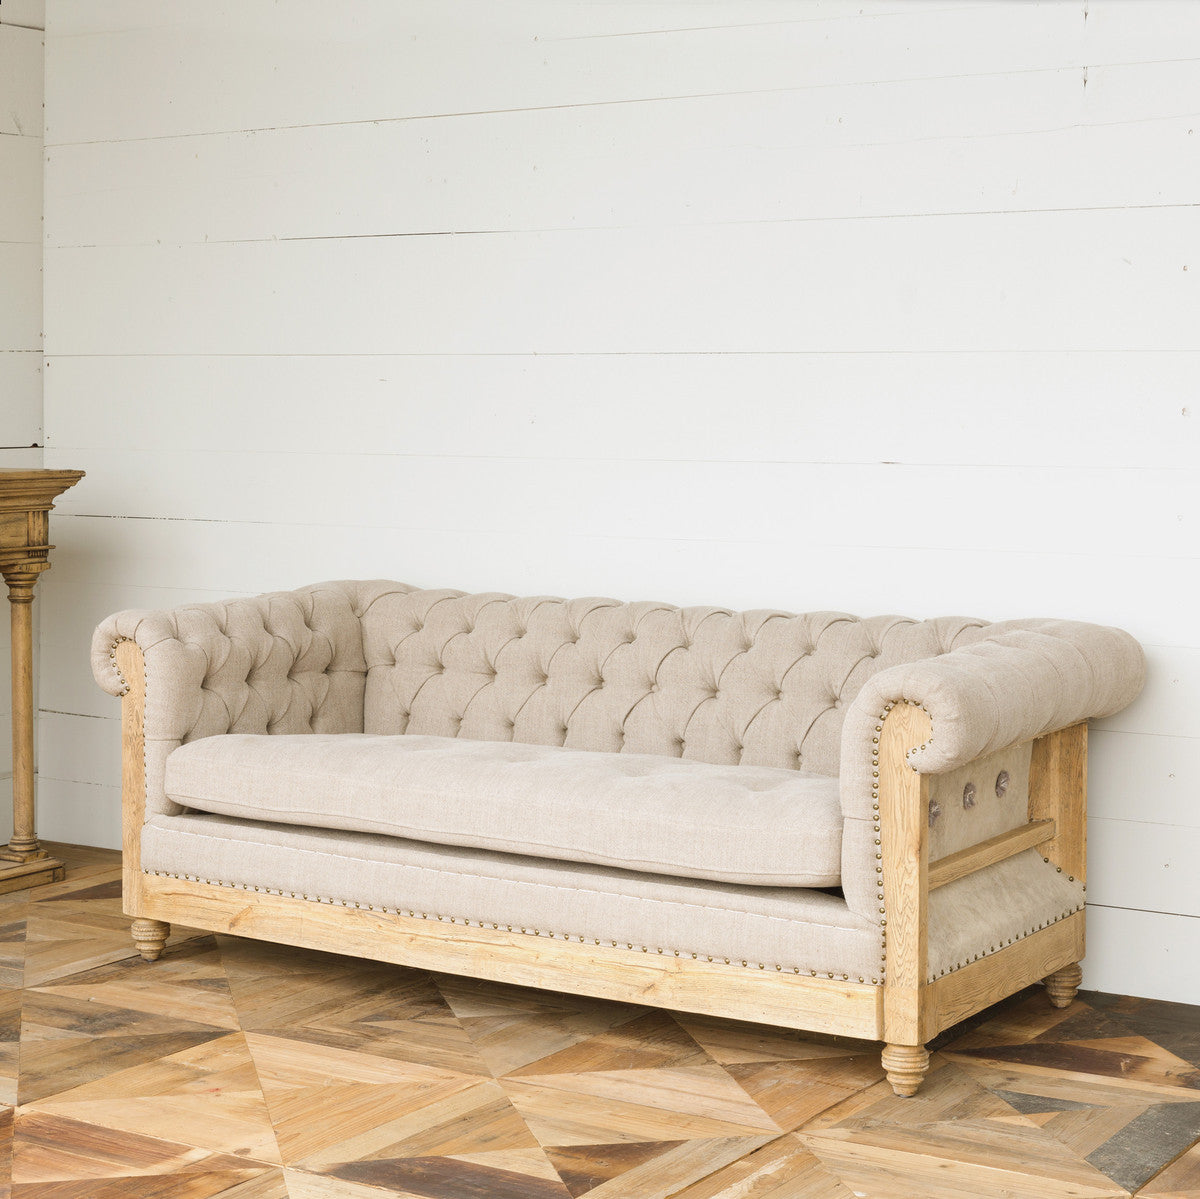 The Marseille Tufted Sofa